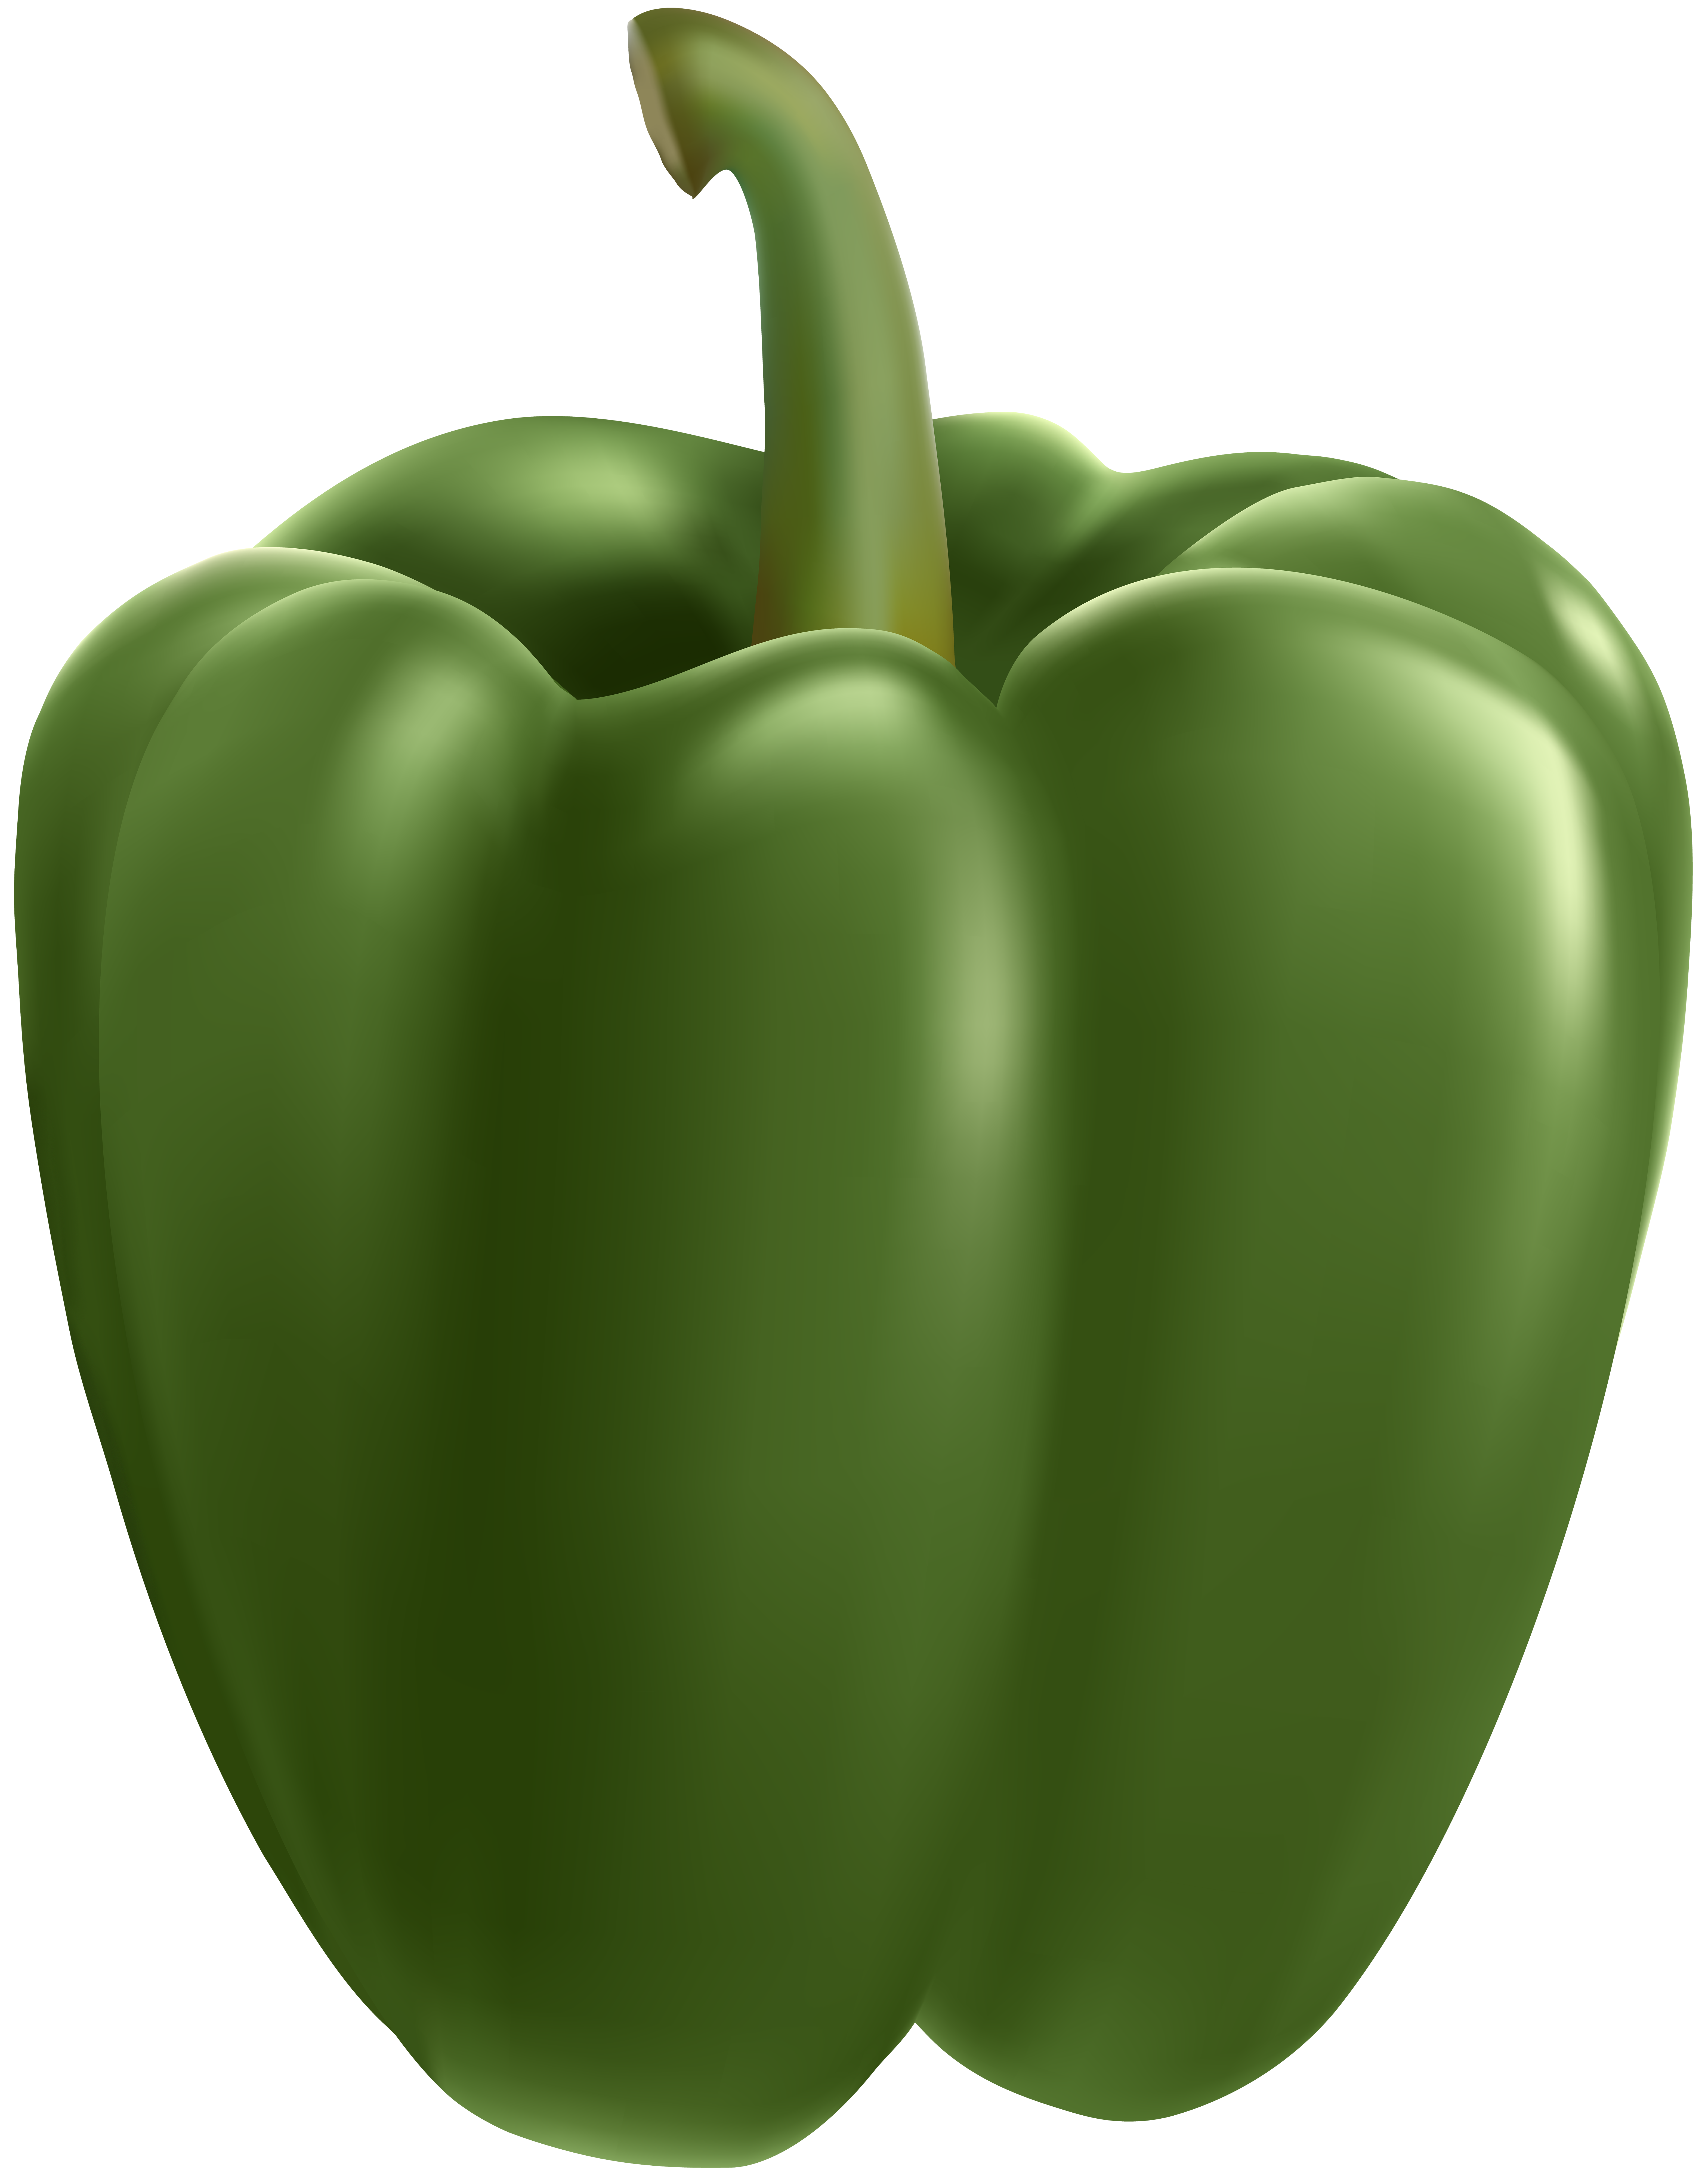 green bell pepper clipart png - Clip Art Library